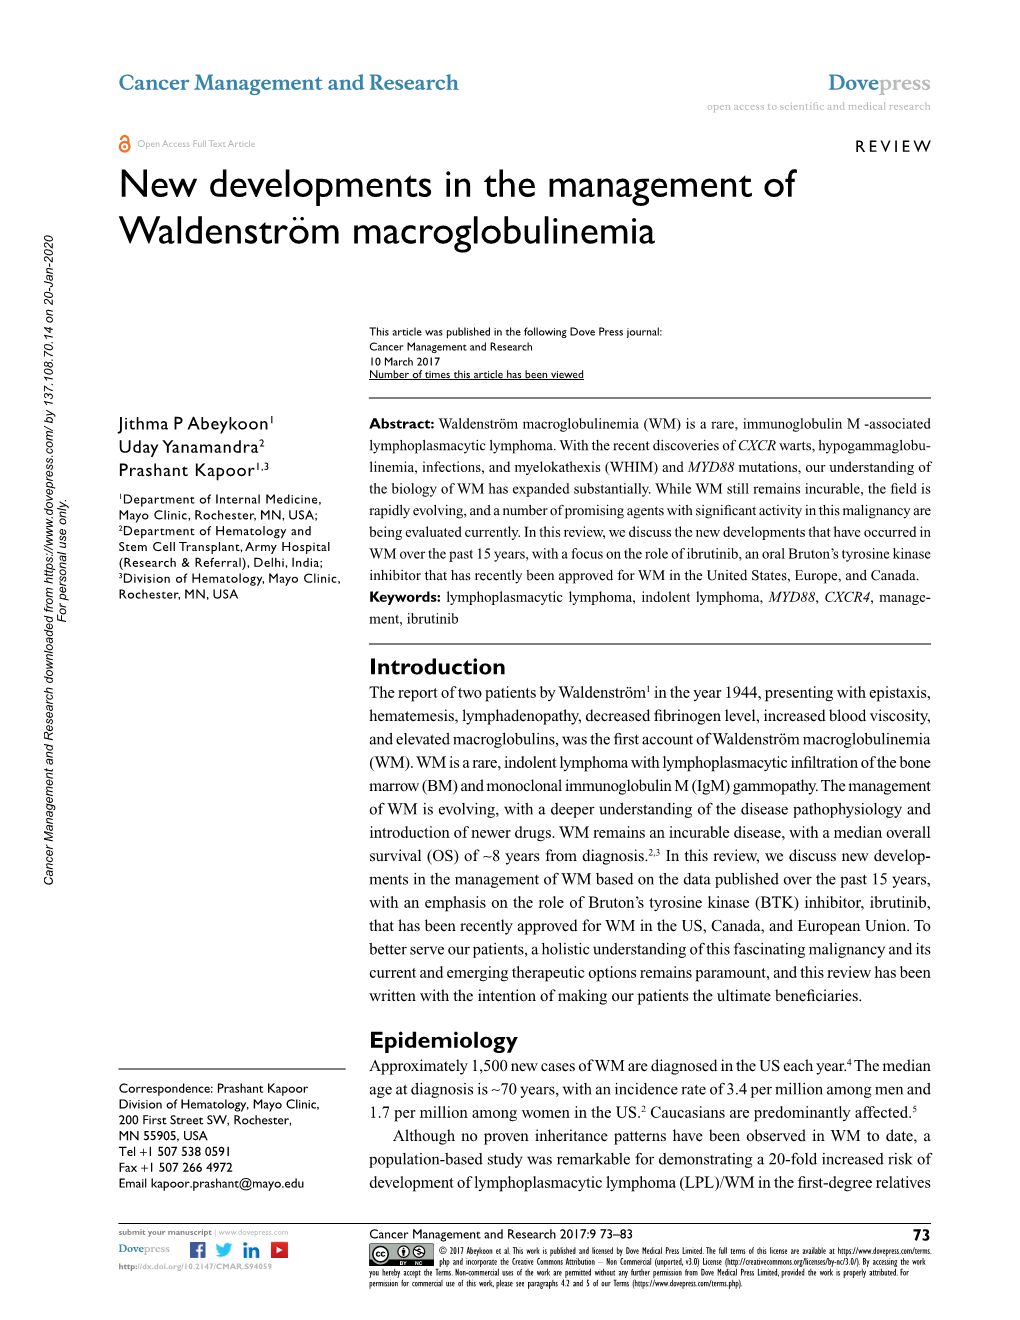 New Developments in the Management of Waldenström Macroglobulinemia